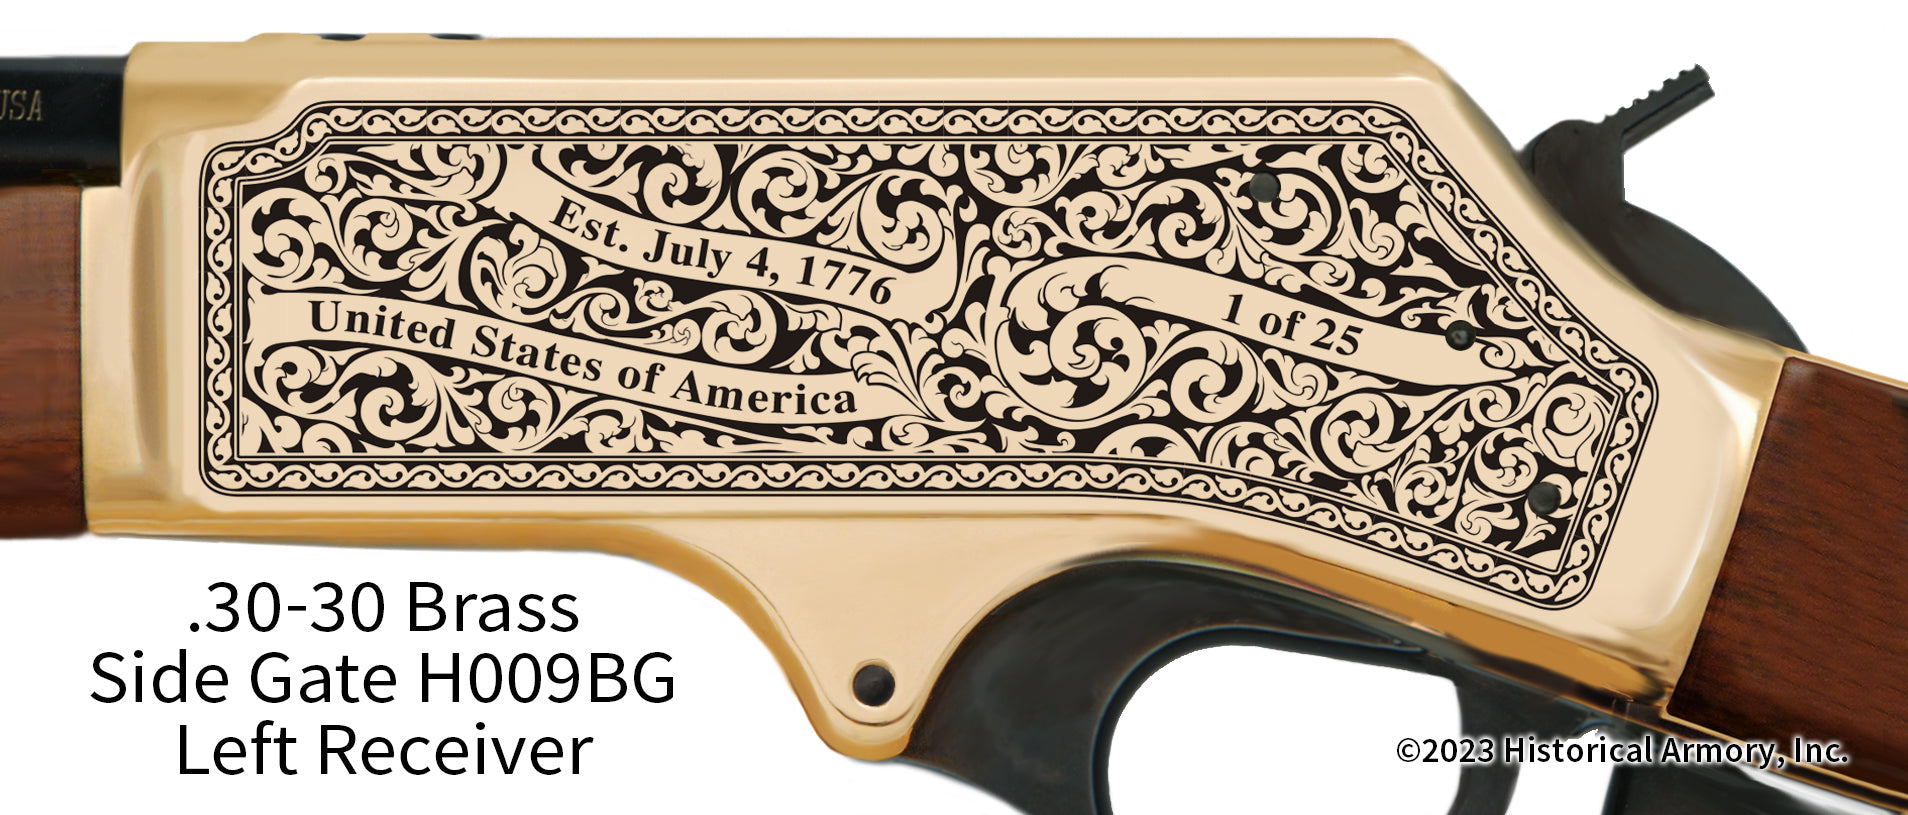 Catoosa County Georgia Engraved Henry .30-30 Rifle